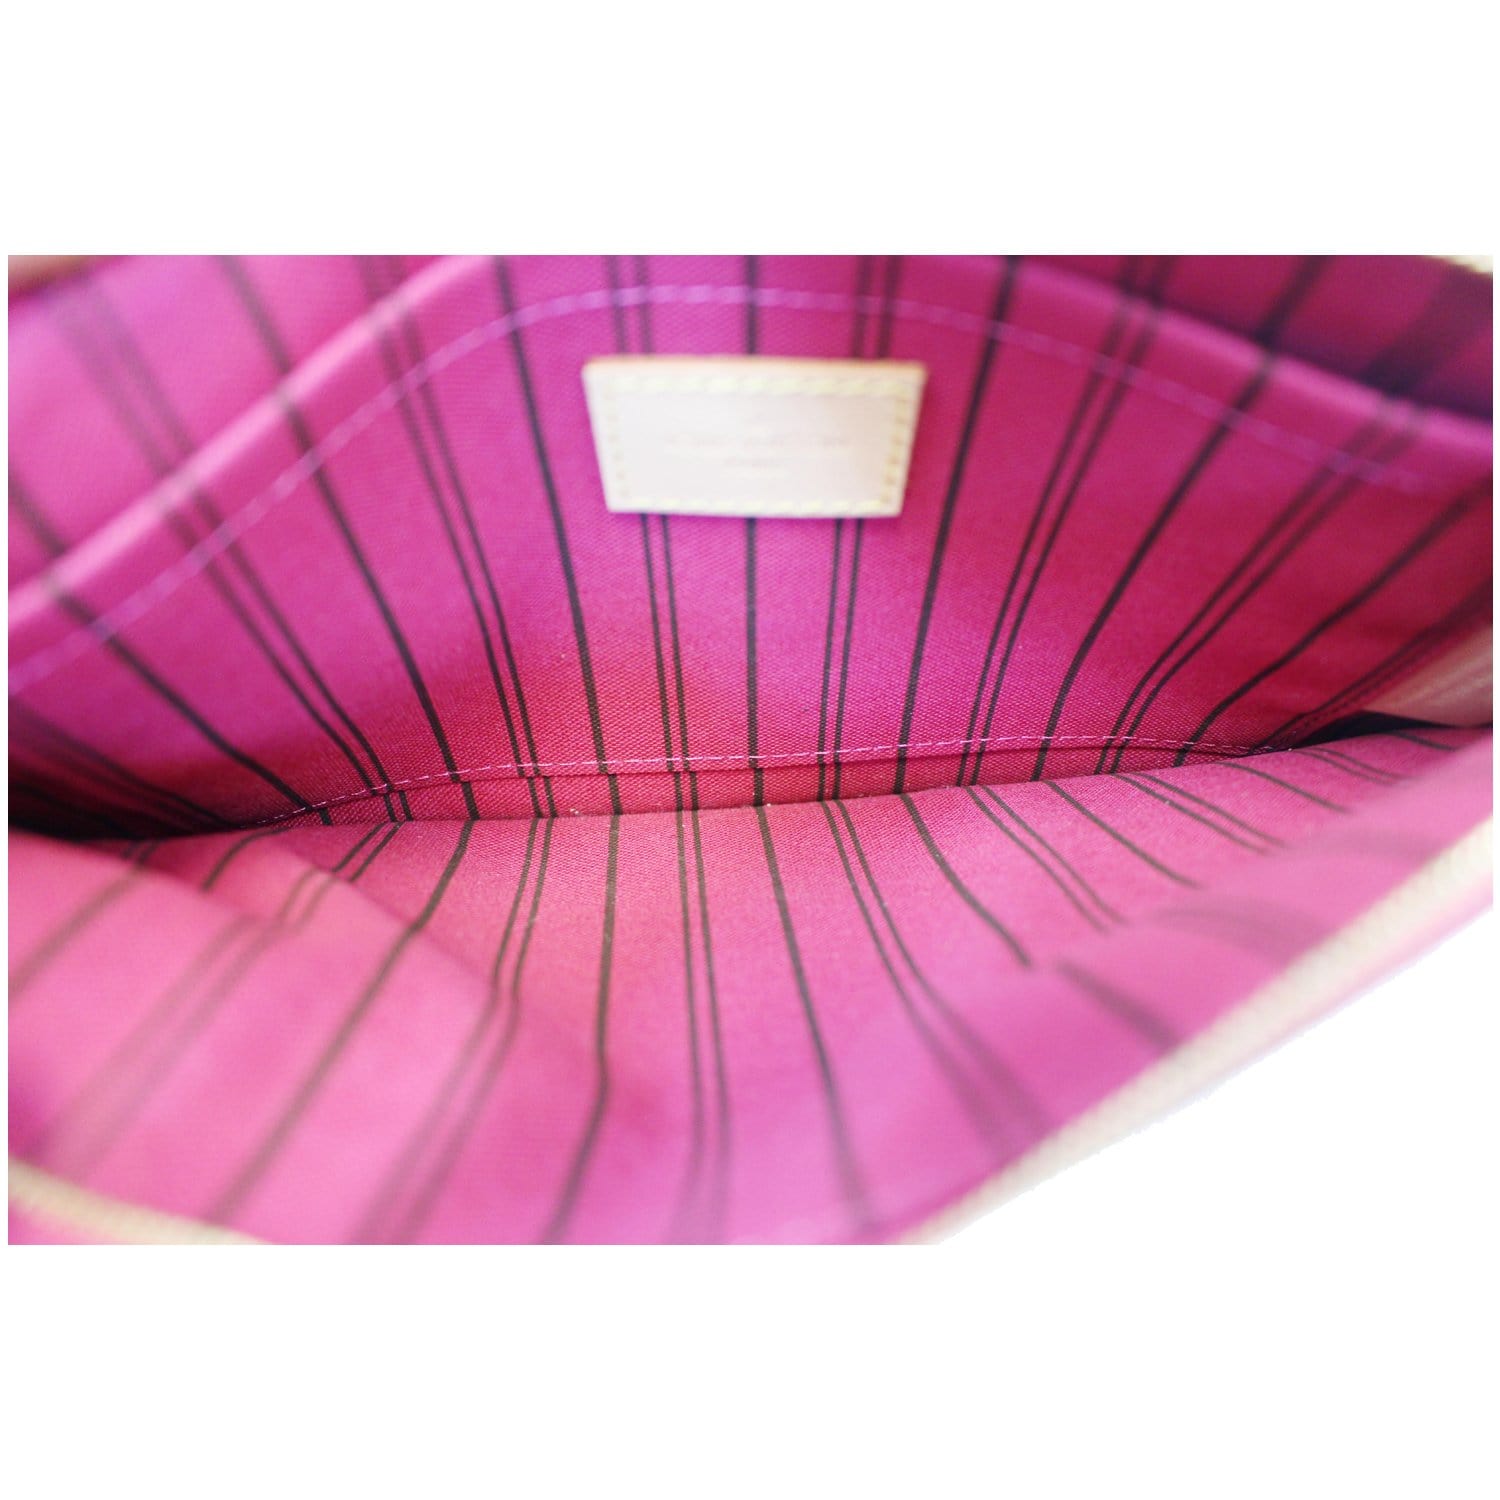 Louis Vuitton Neverfull Pouch clutch wristlet Pivoine Pink Interior